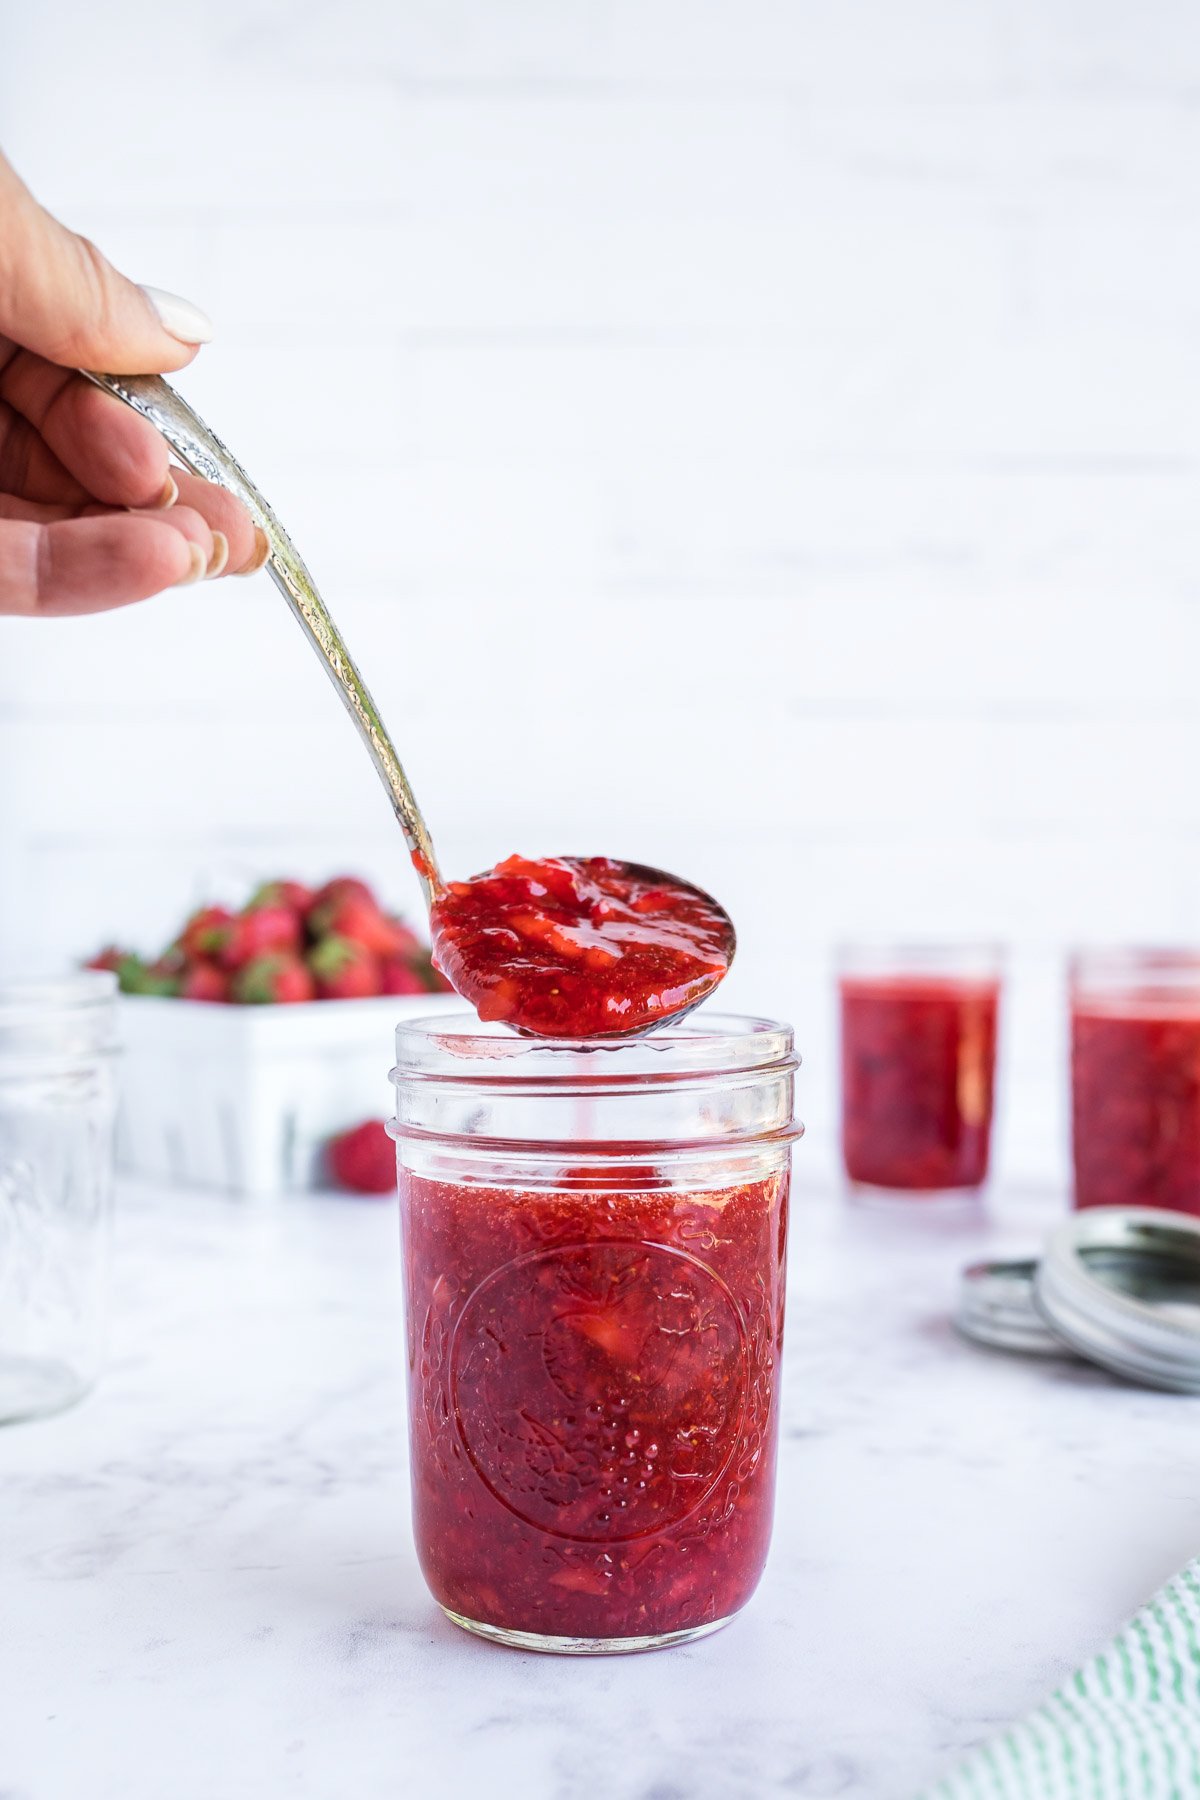 spoon full of strawberry freezer jam above a jar of jam